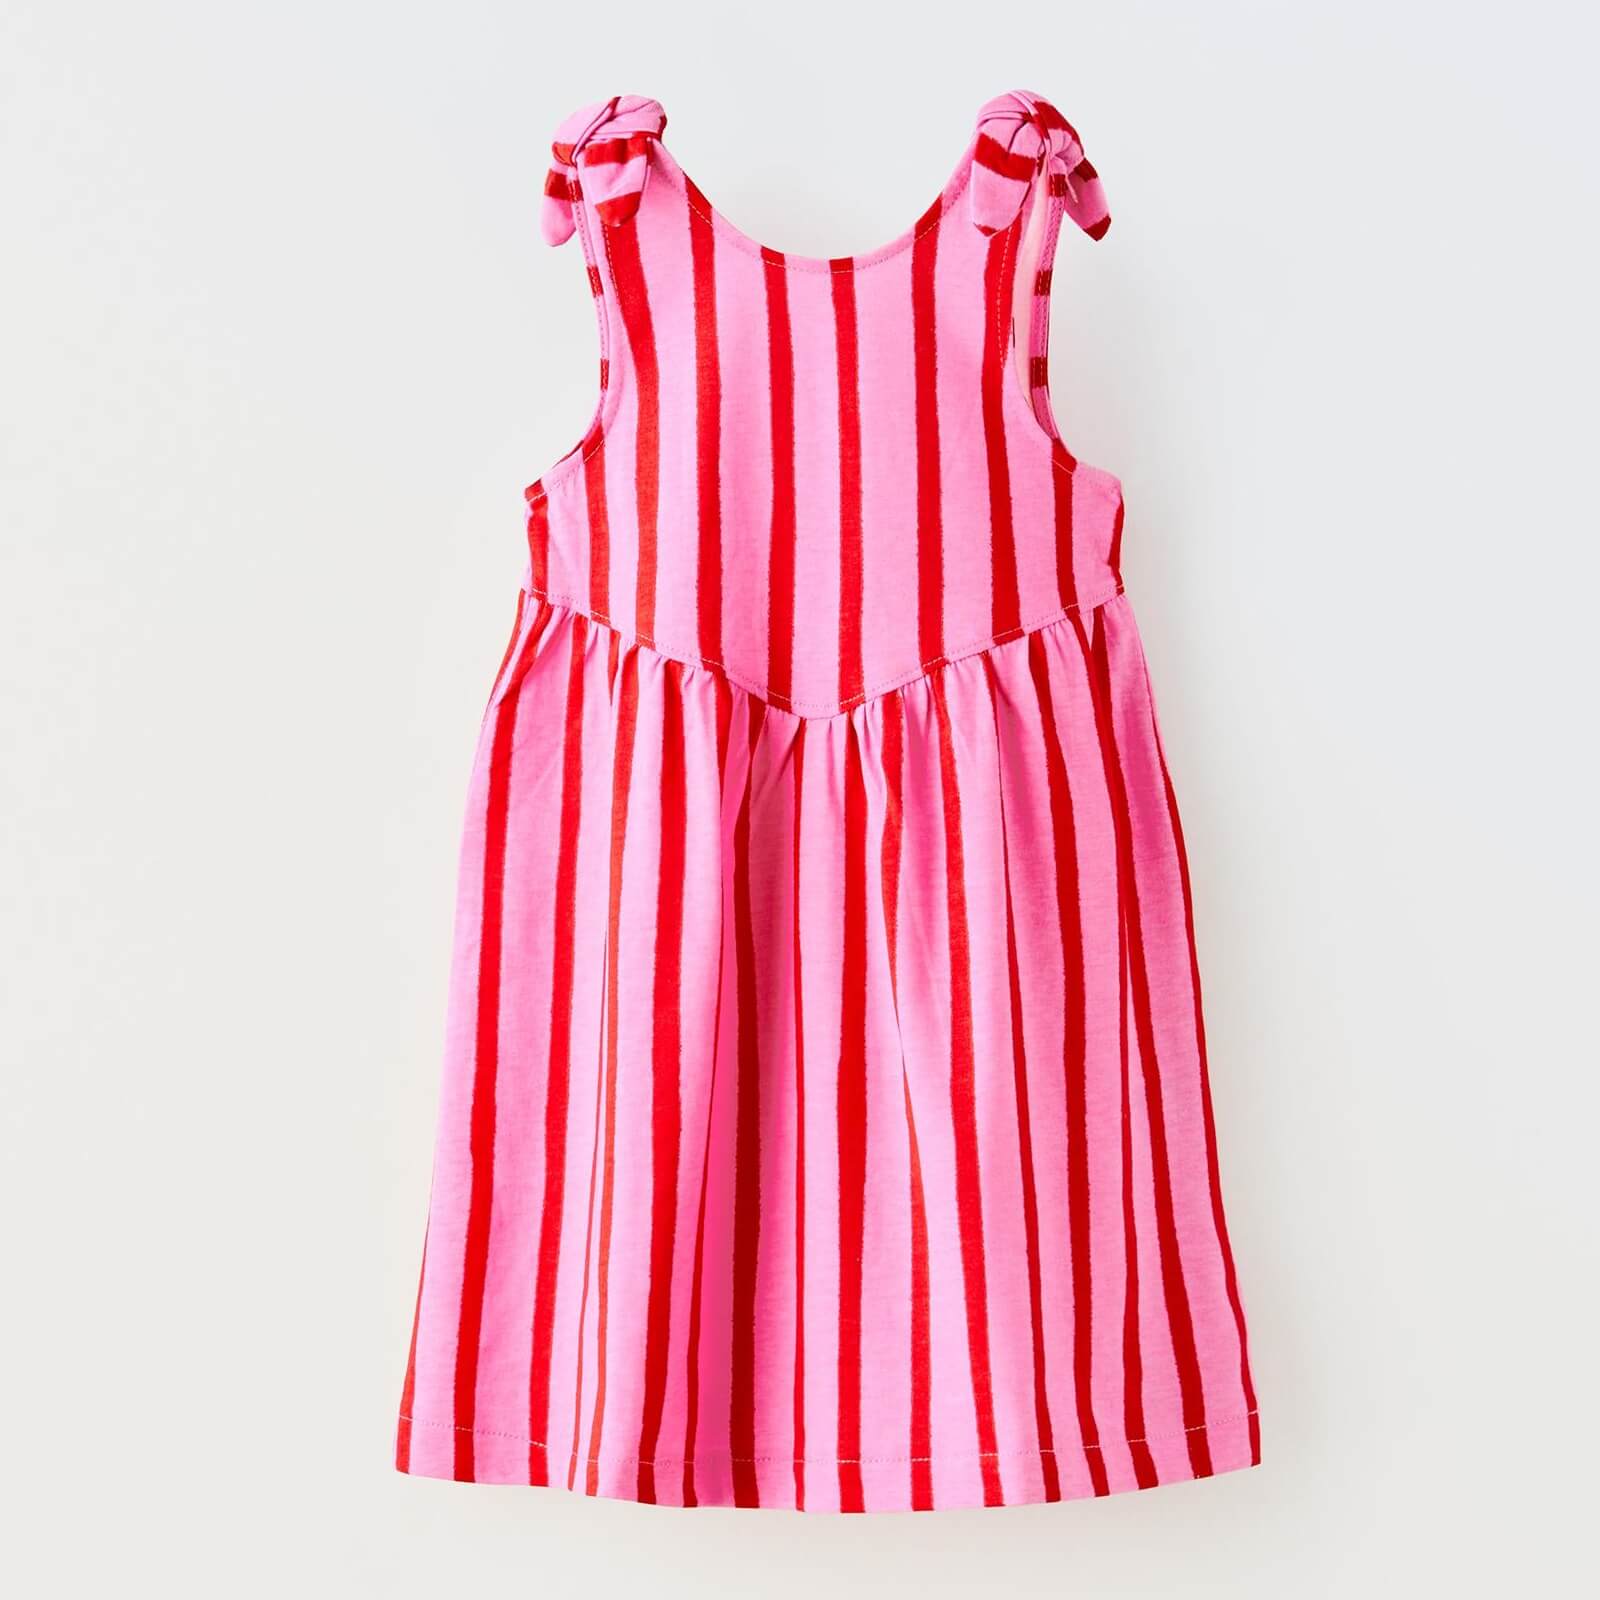 Платье Zara Striped With Knot, розовый/красный футболка zara printed with knot светло оранжевый